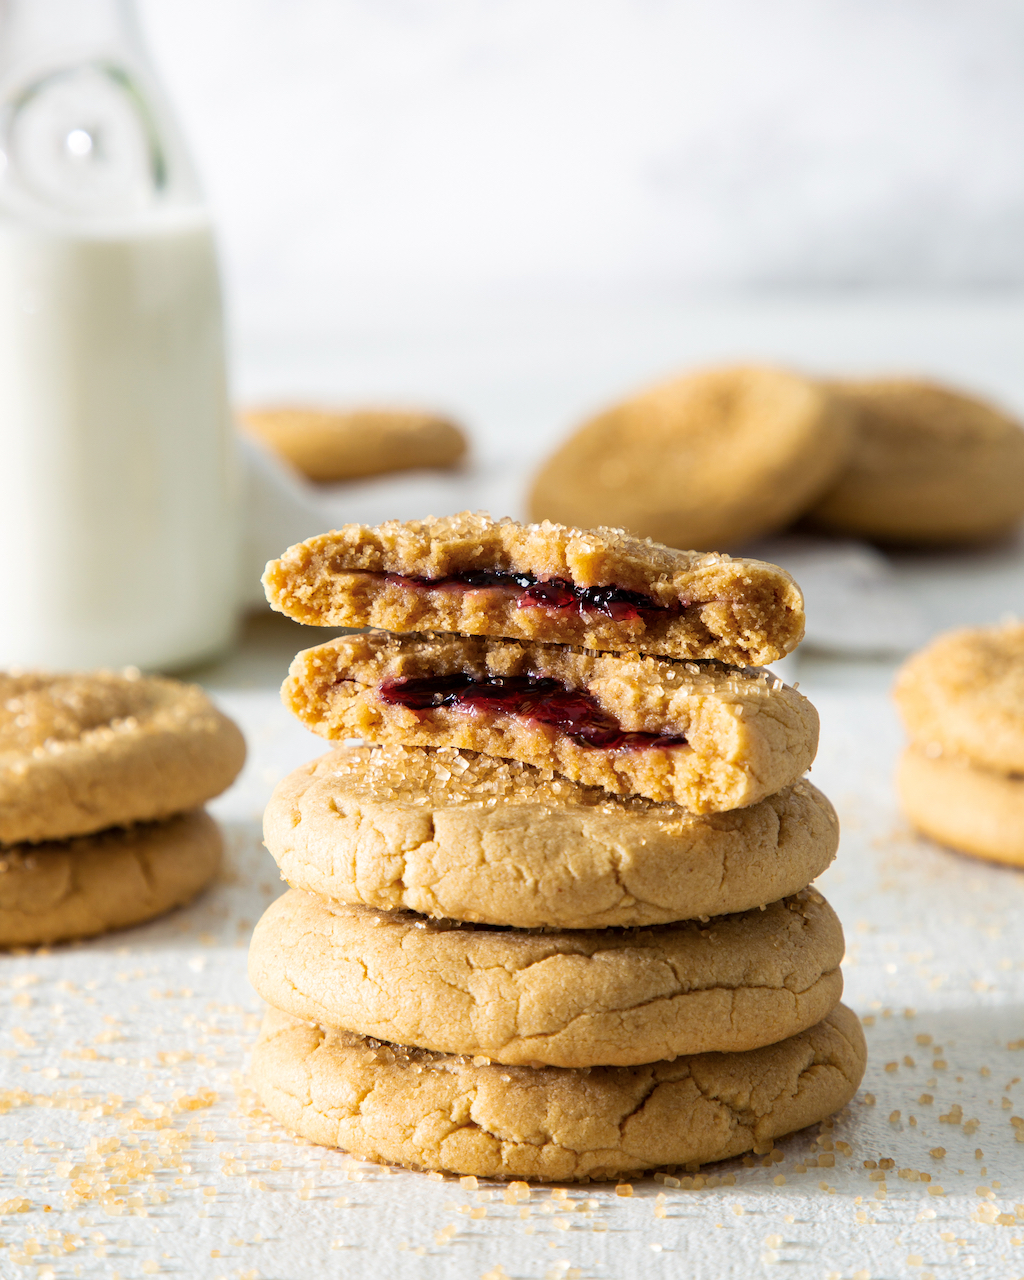 Grape Jelly-Stuffed Peanut Butter Cookies - Bake from Scratch